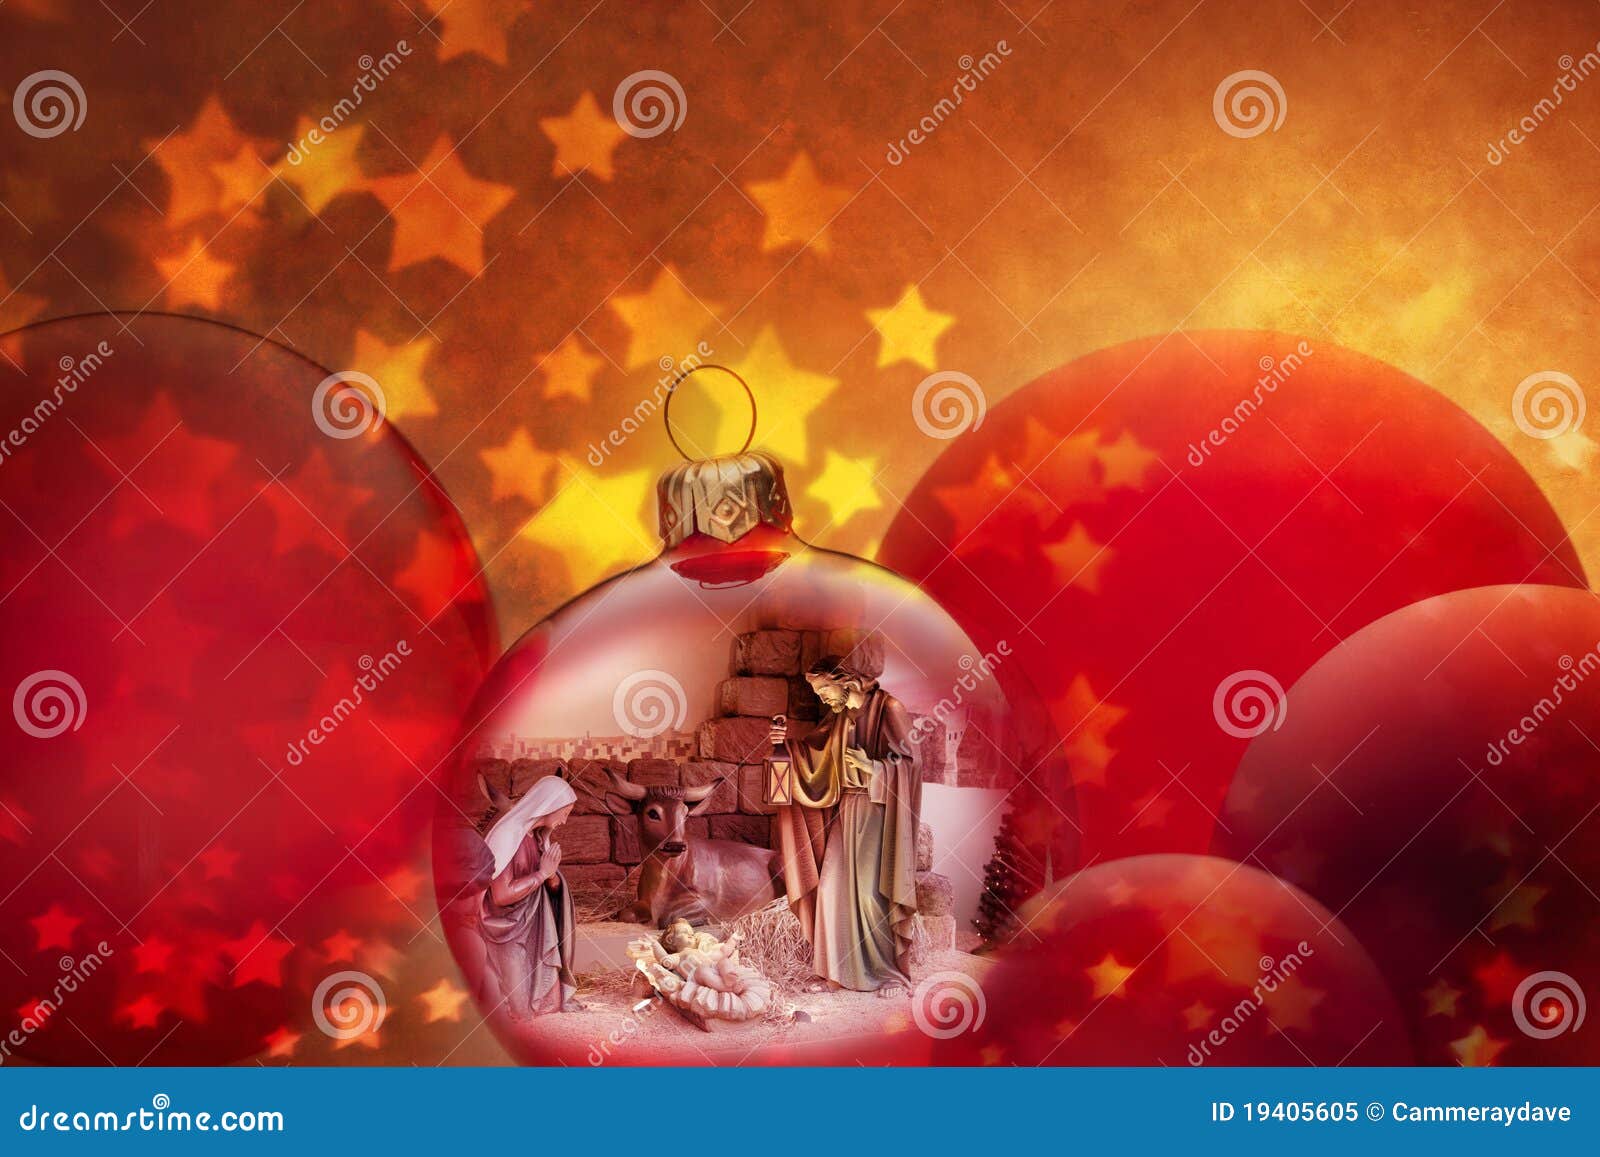 christmas nativity scene ornaments jesus birth